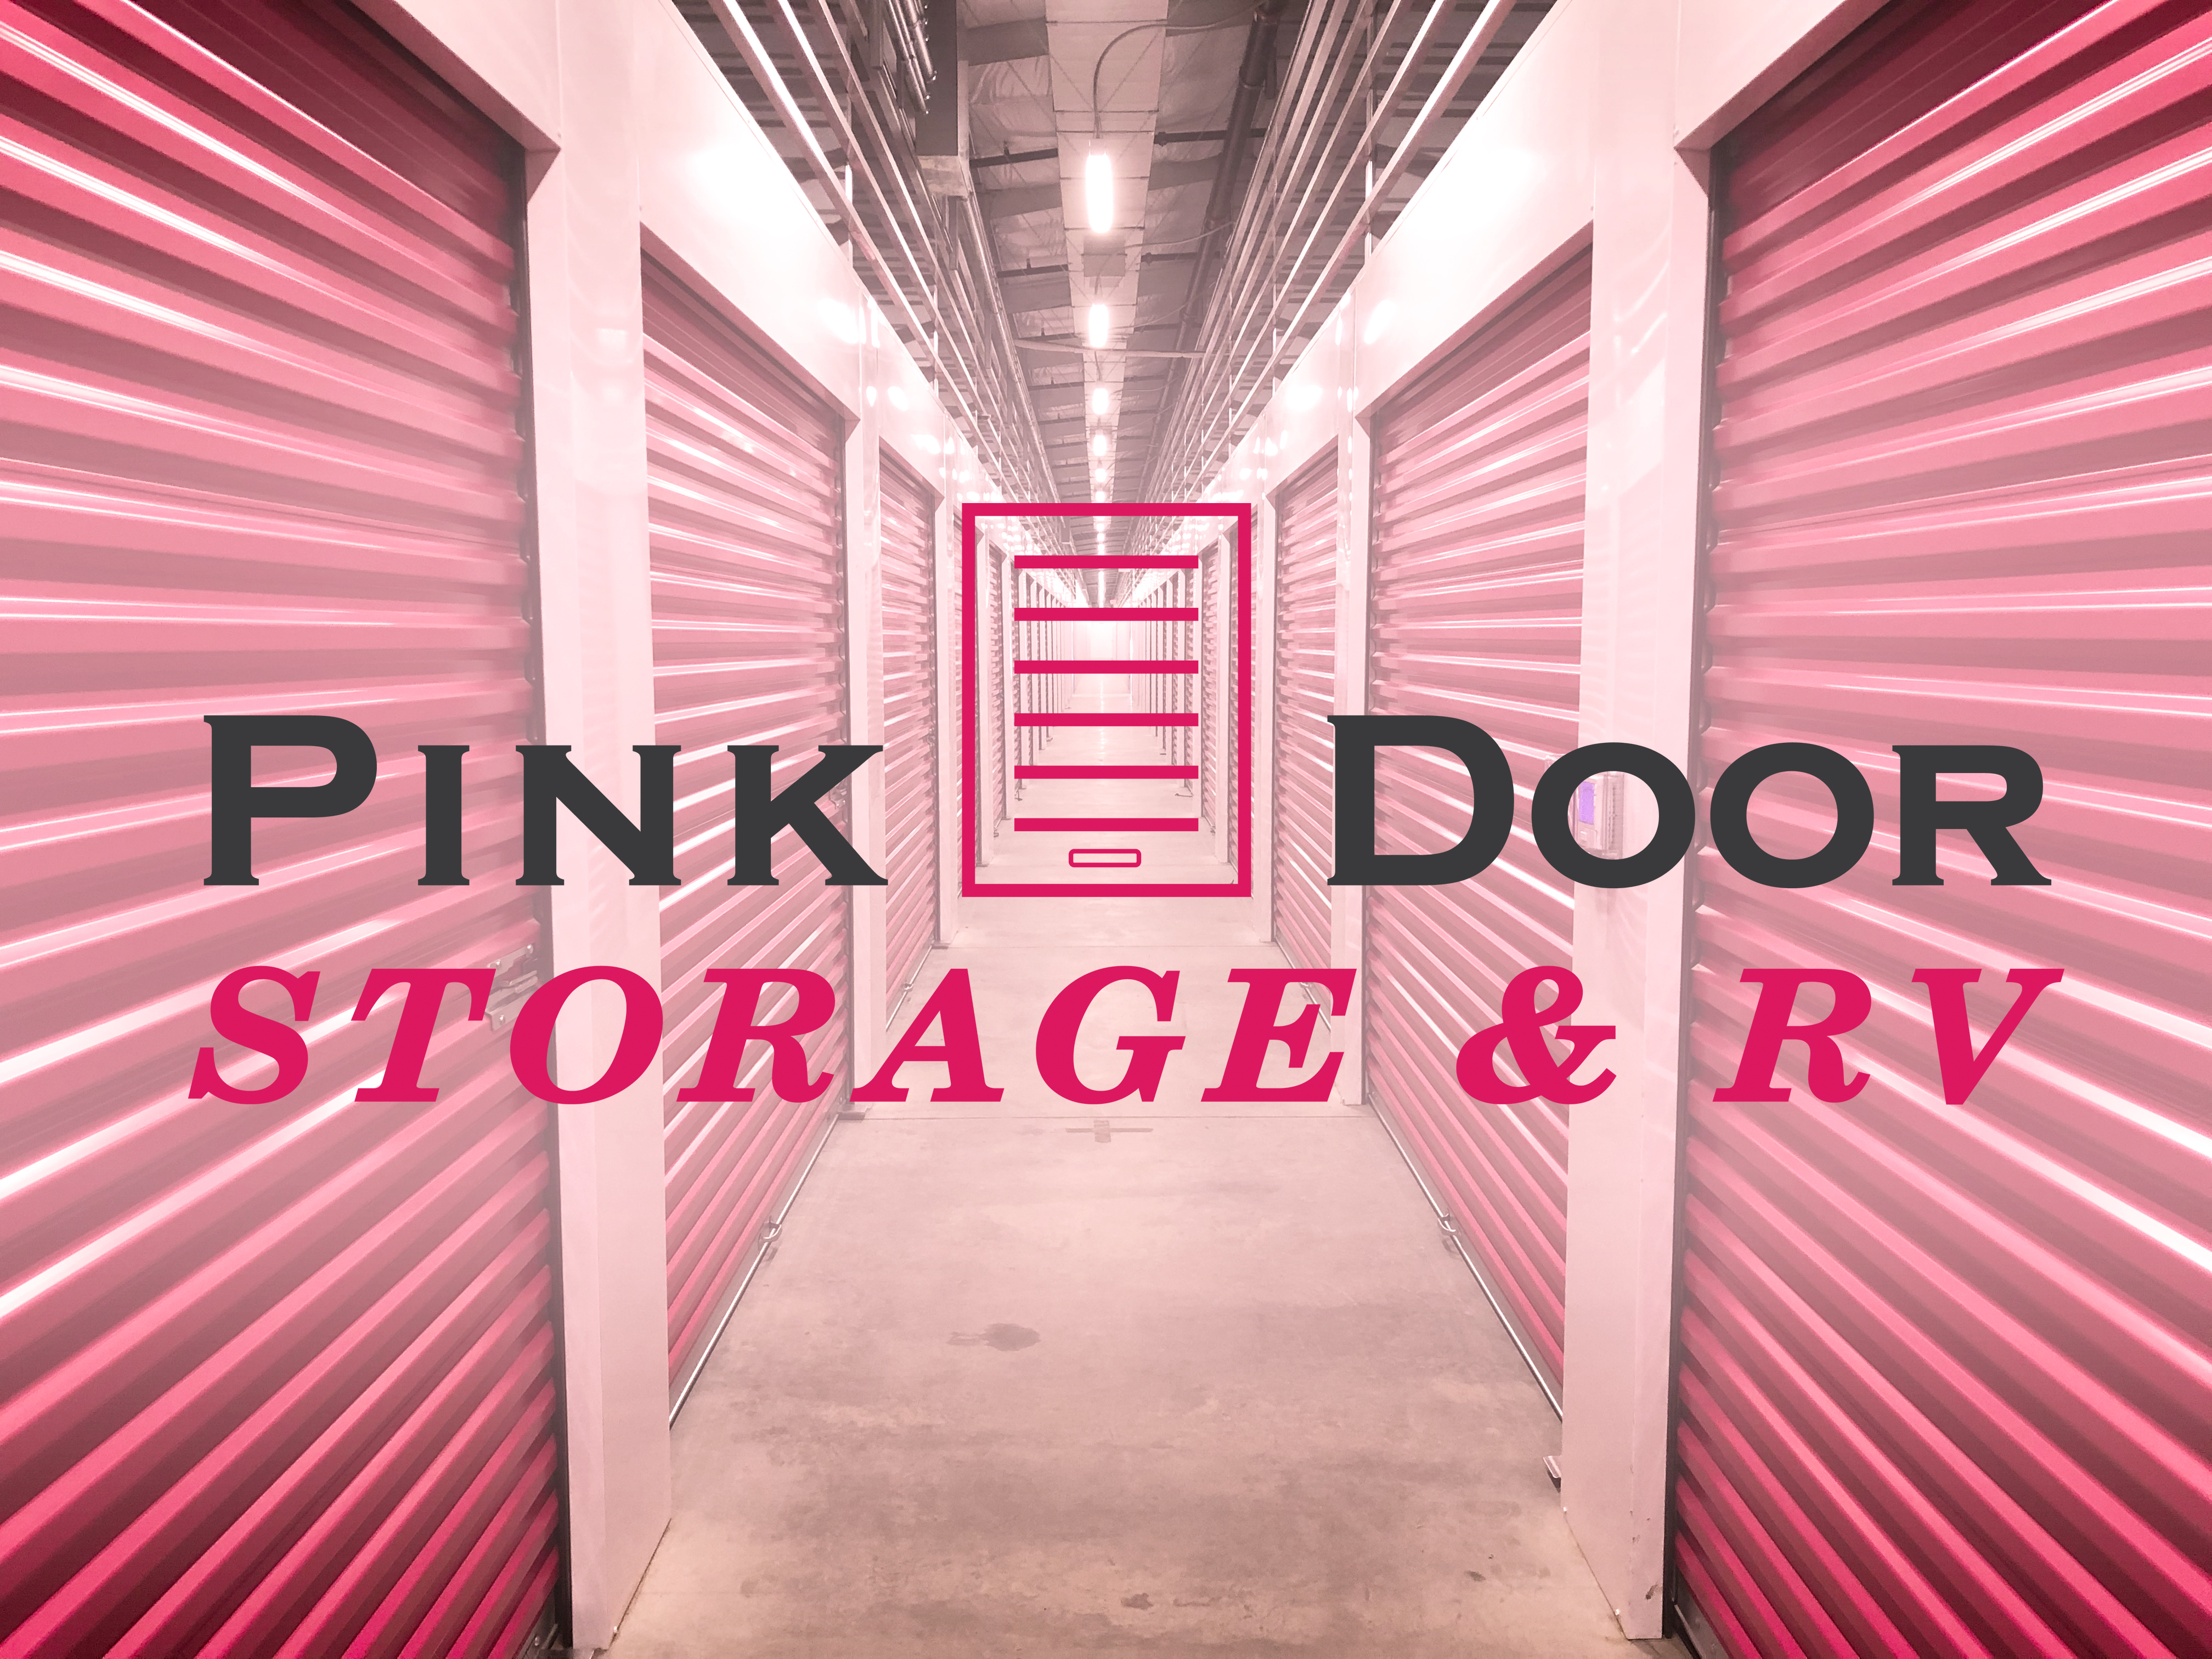 Pink Door Storage & RV - Locations Nationwide